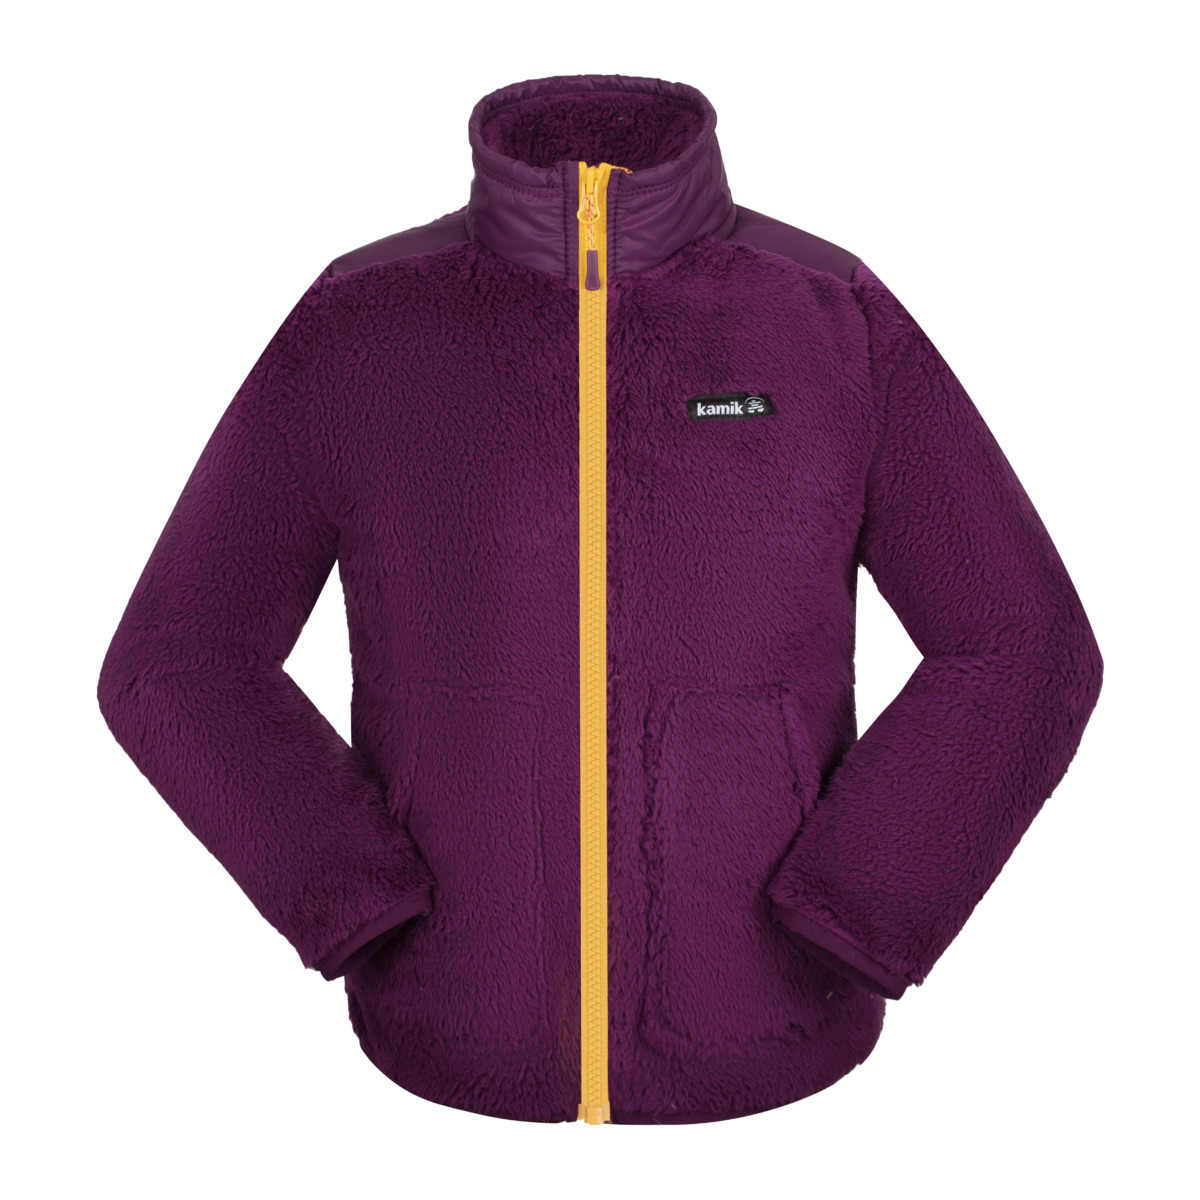 Флисовая куртка Kamik AURORAA, фиолетовый флисовая куртка auroraa bekleidung kamik цвет grape saffron raisin v46926 gsf